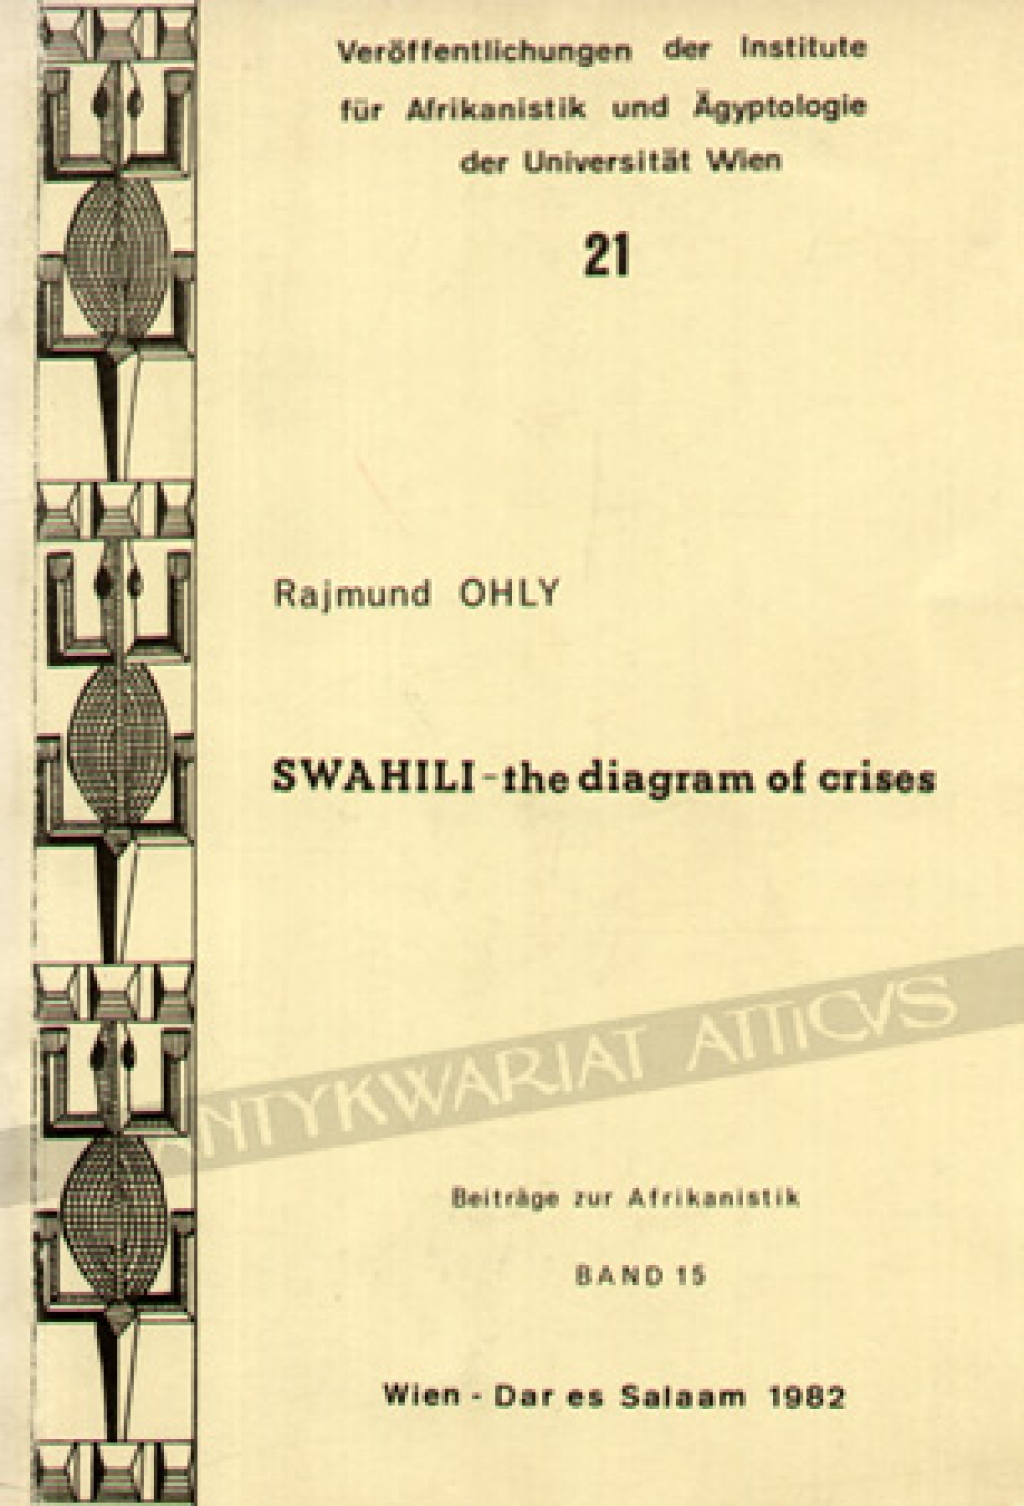 Swahili - the diagram of crises